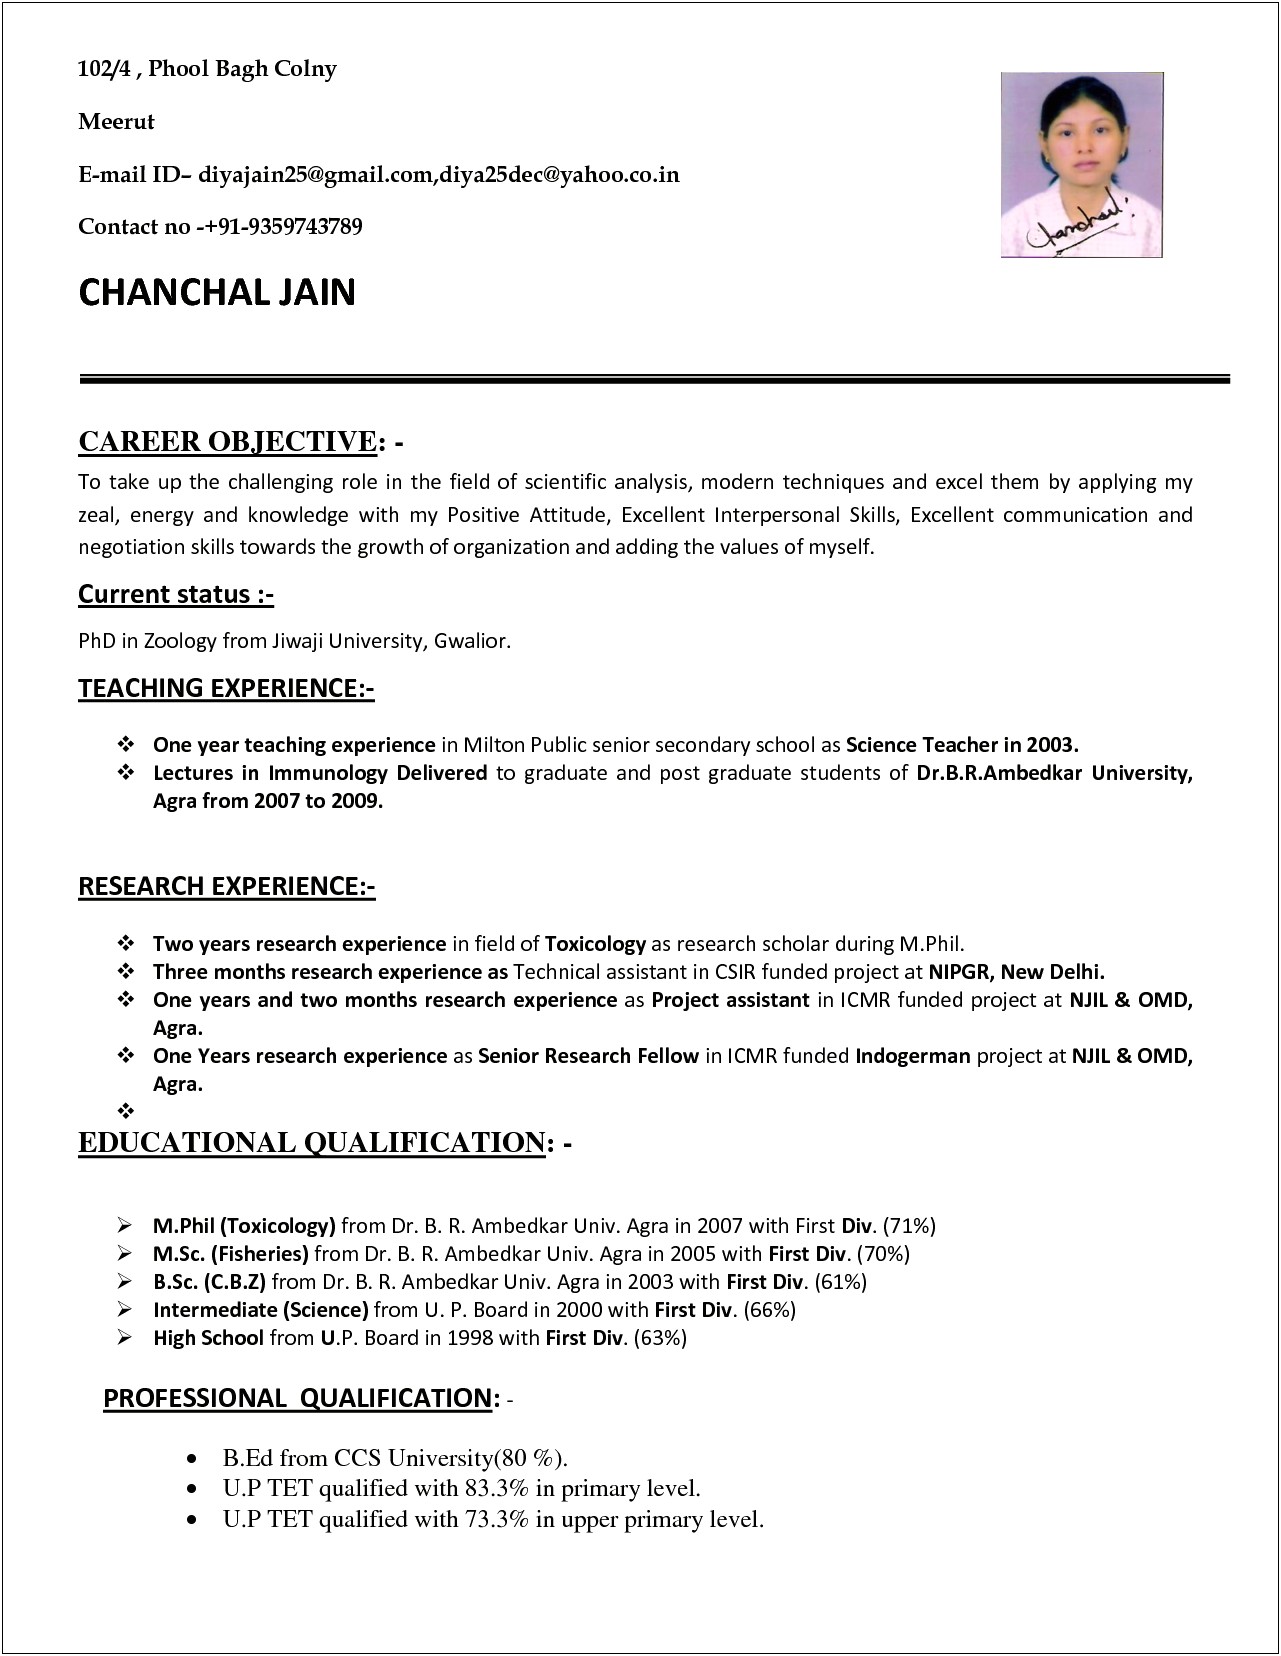 Resume Format For High School Teacher In India